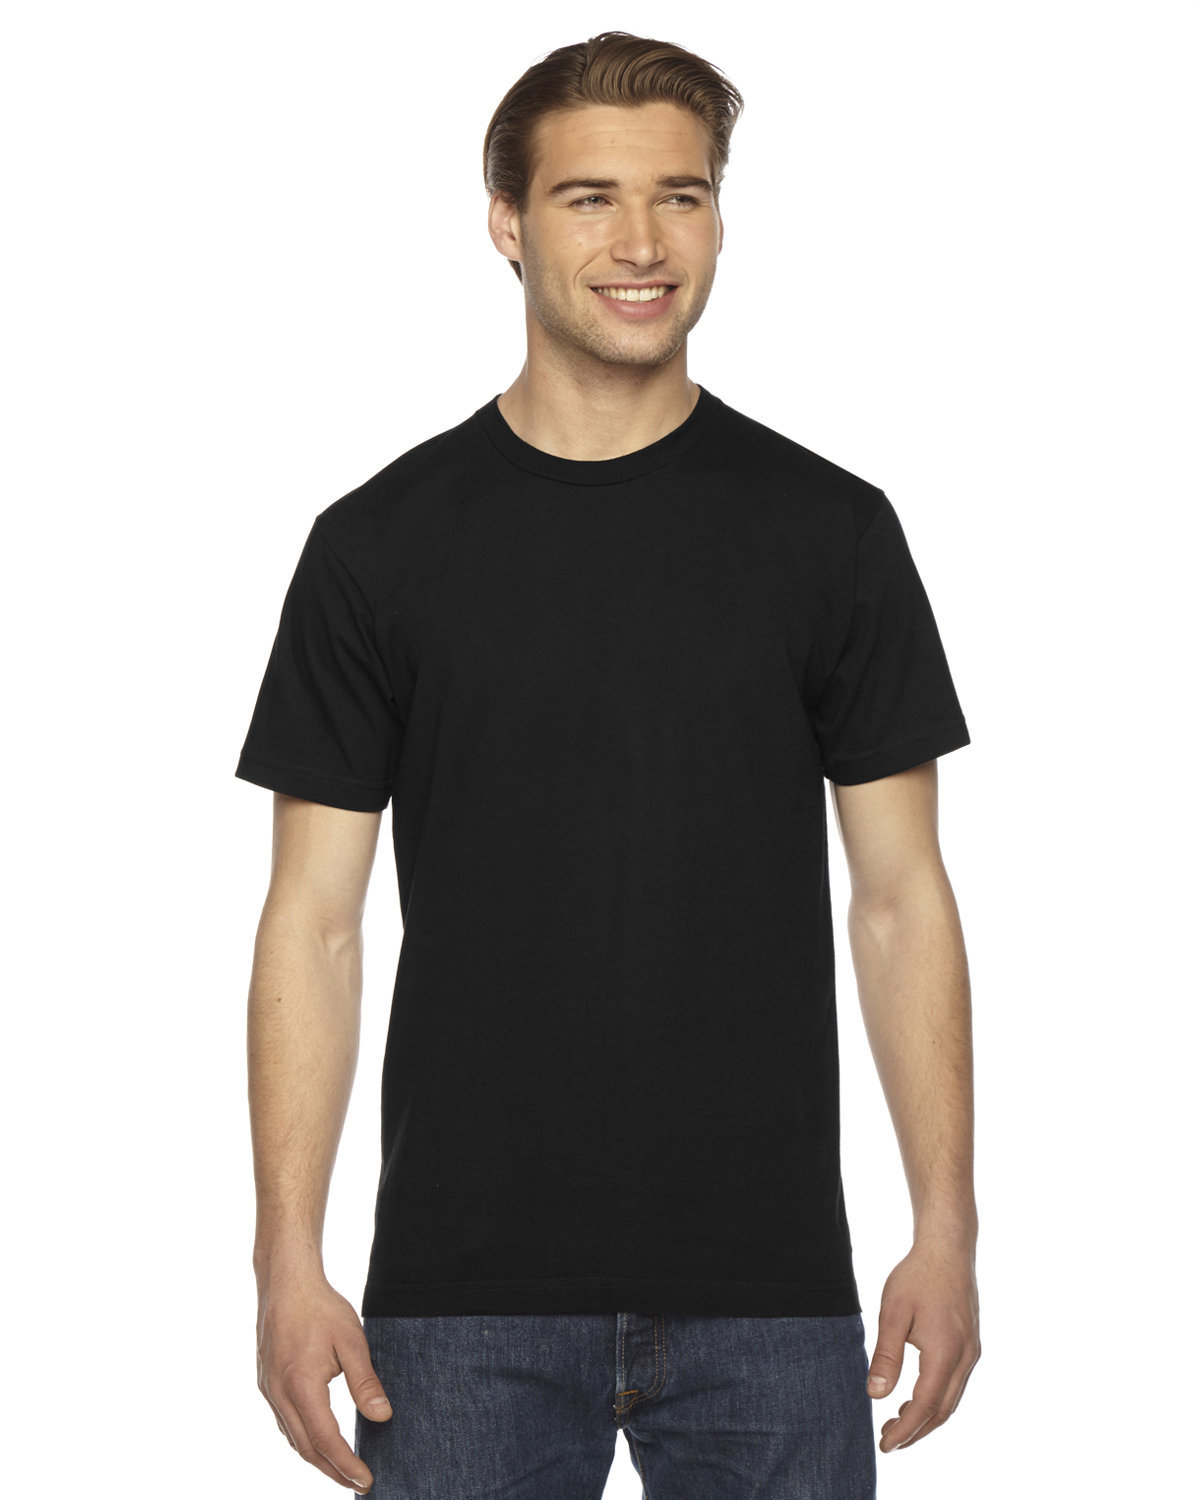 American Apparel Unisex Fine Jersey USA Made T-Shirt black 